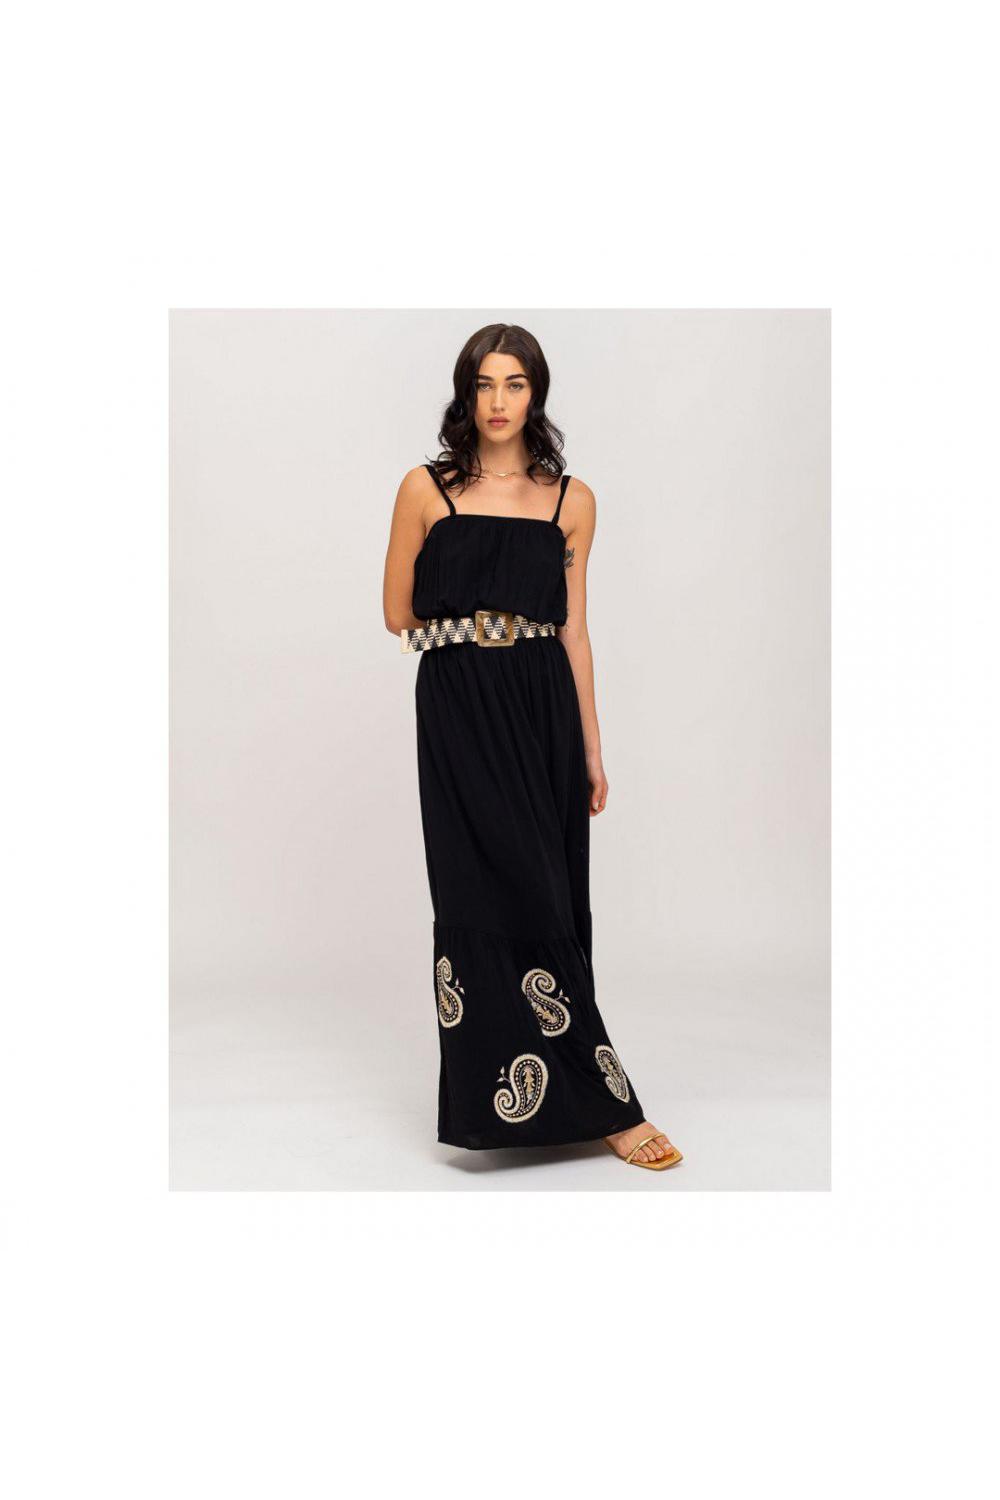 STAFF Dress Gabriella Γυναικείο - Μαύρο (67-020.047-N0000)